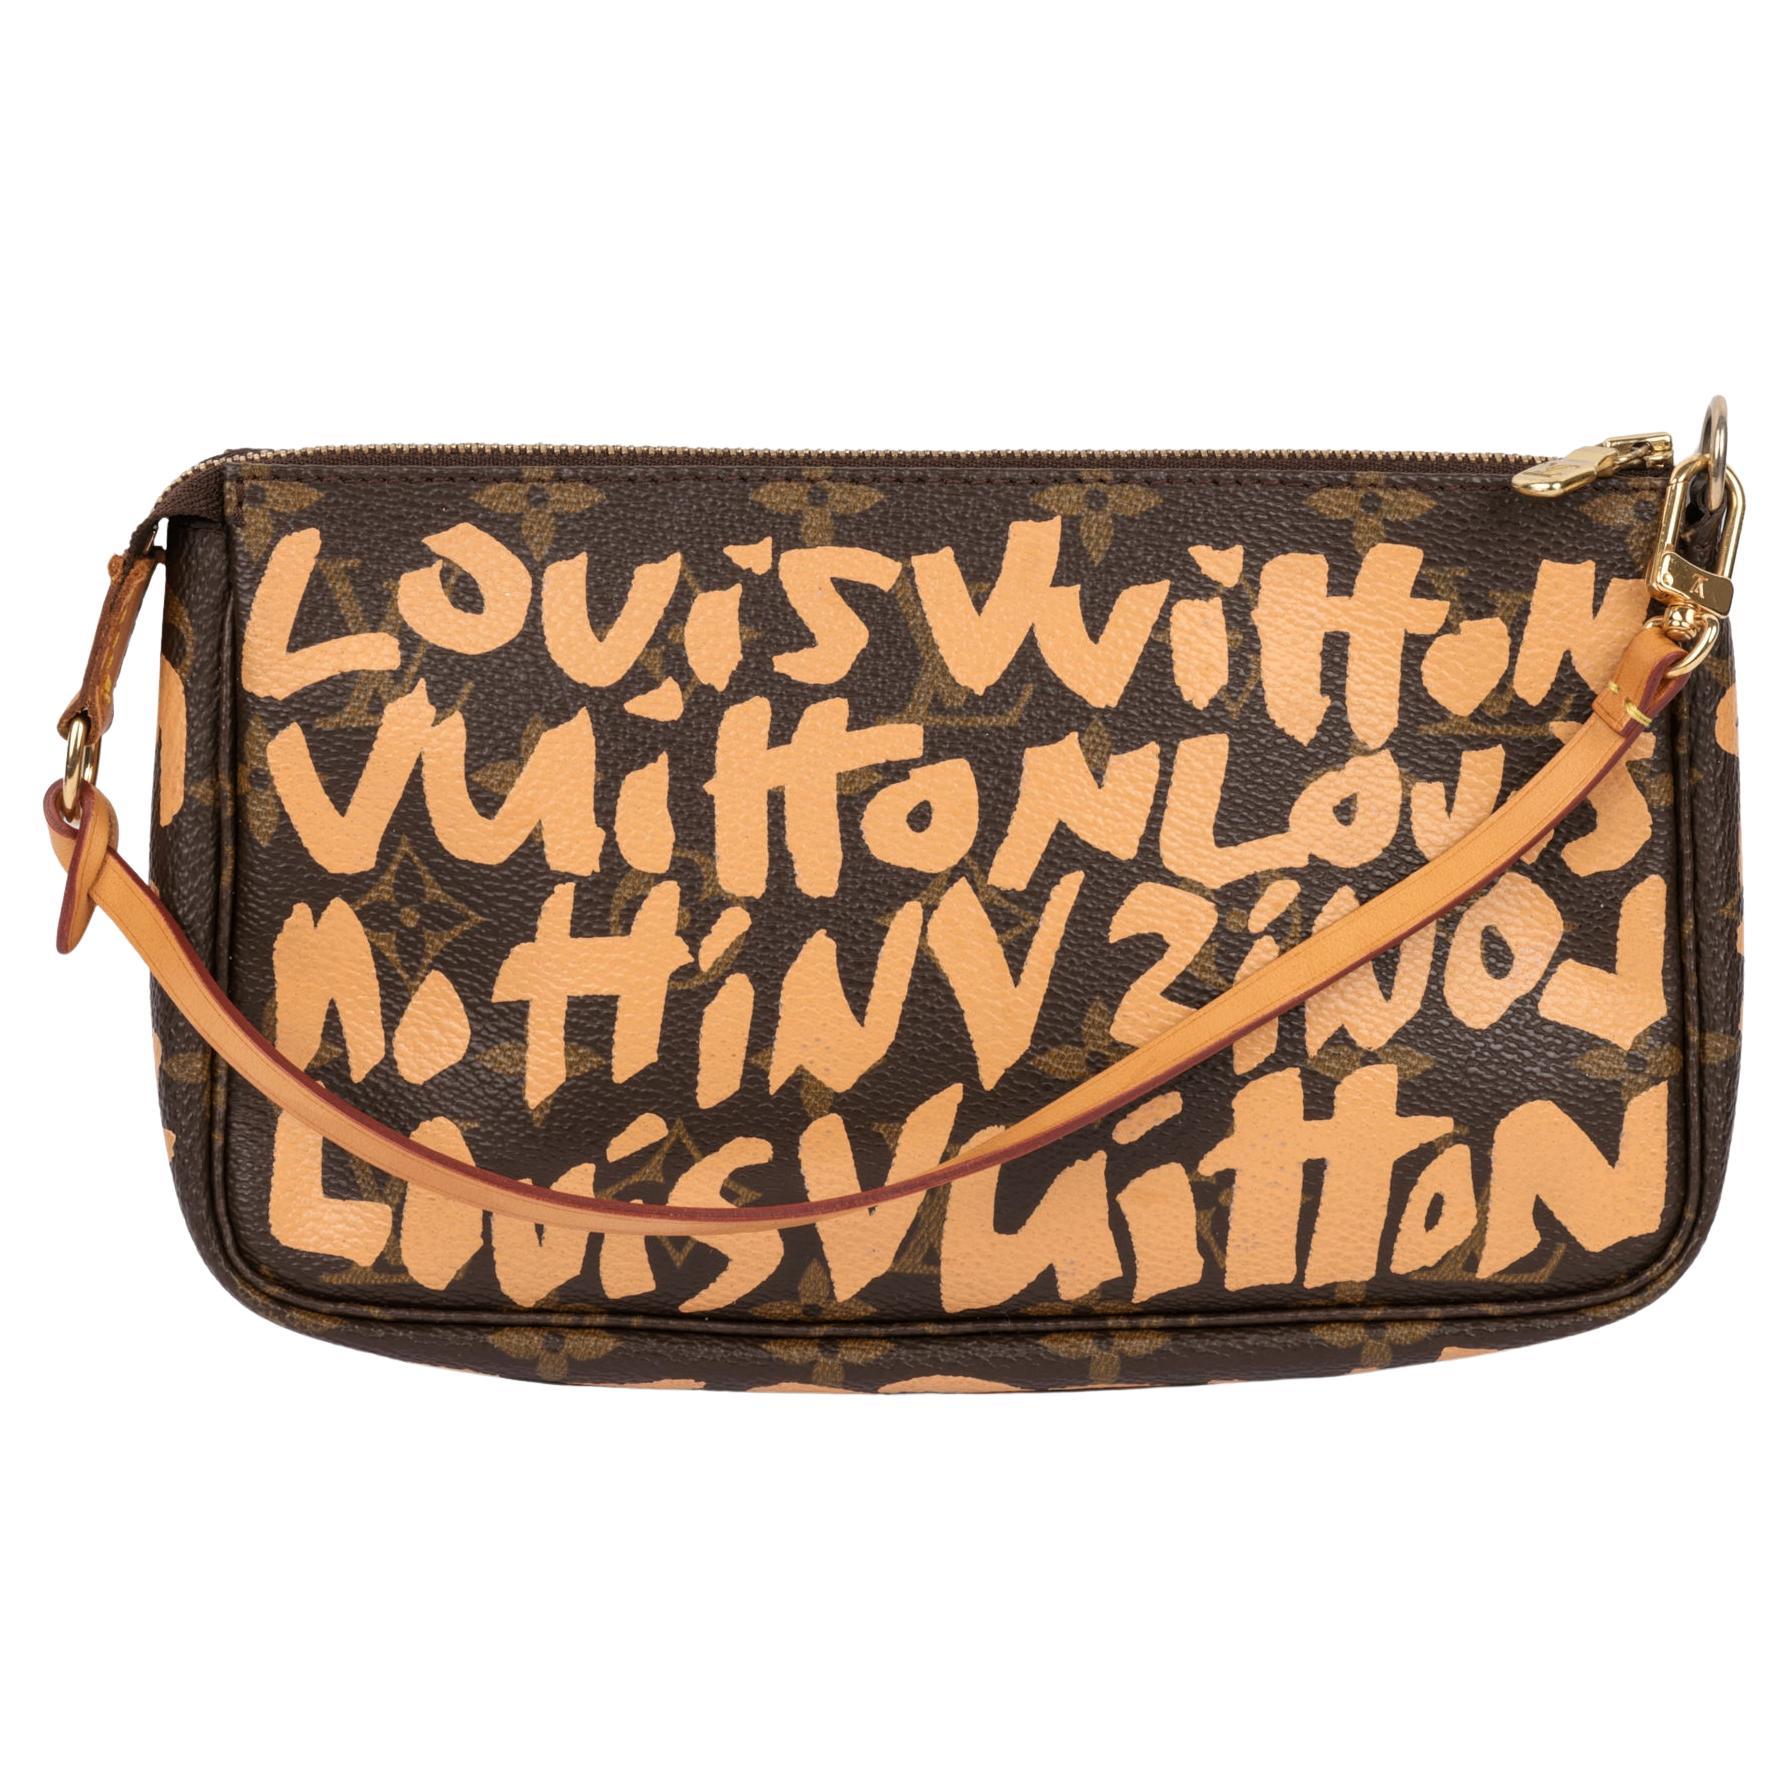 Louis Vuitton Pochette Graffiti - 2 For Sale on 1stDibs